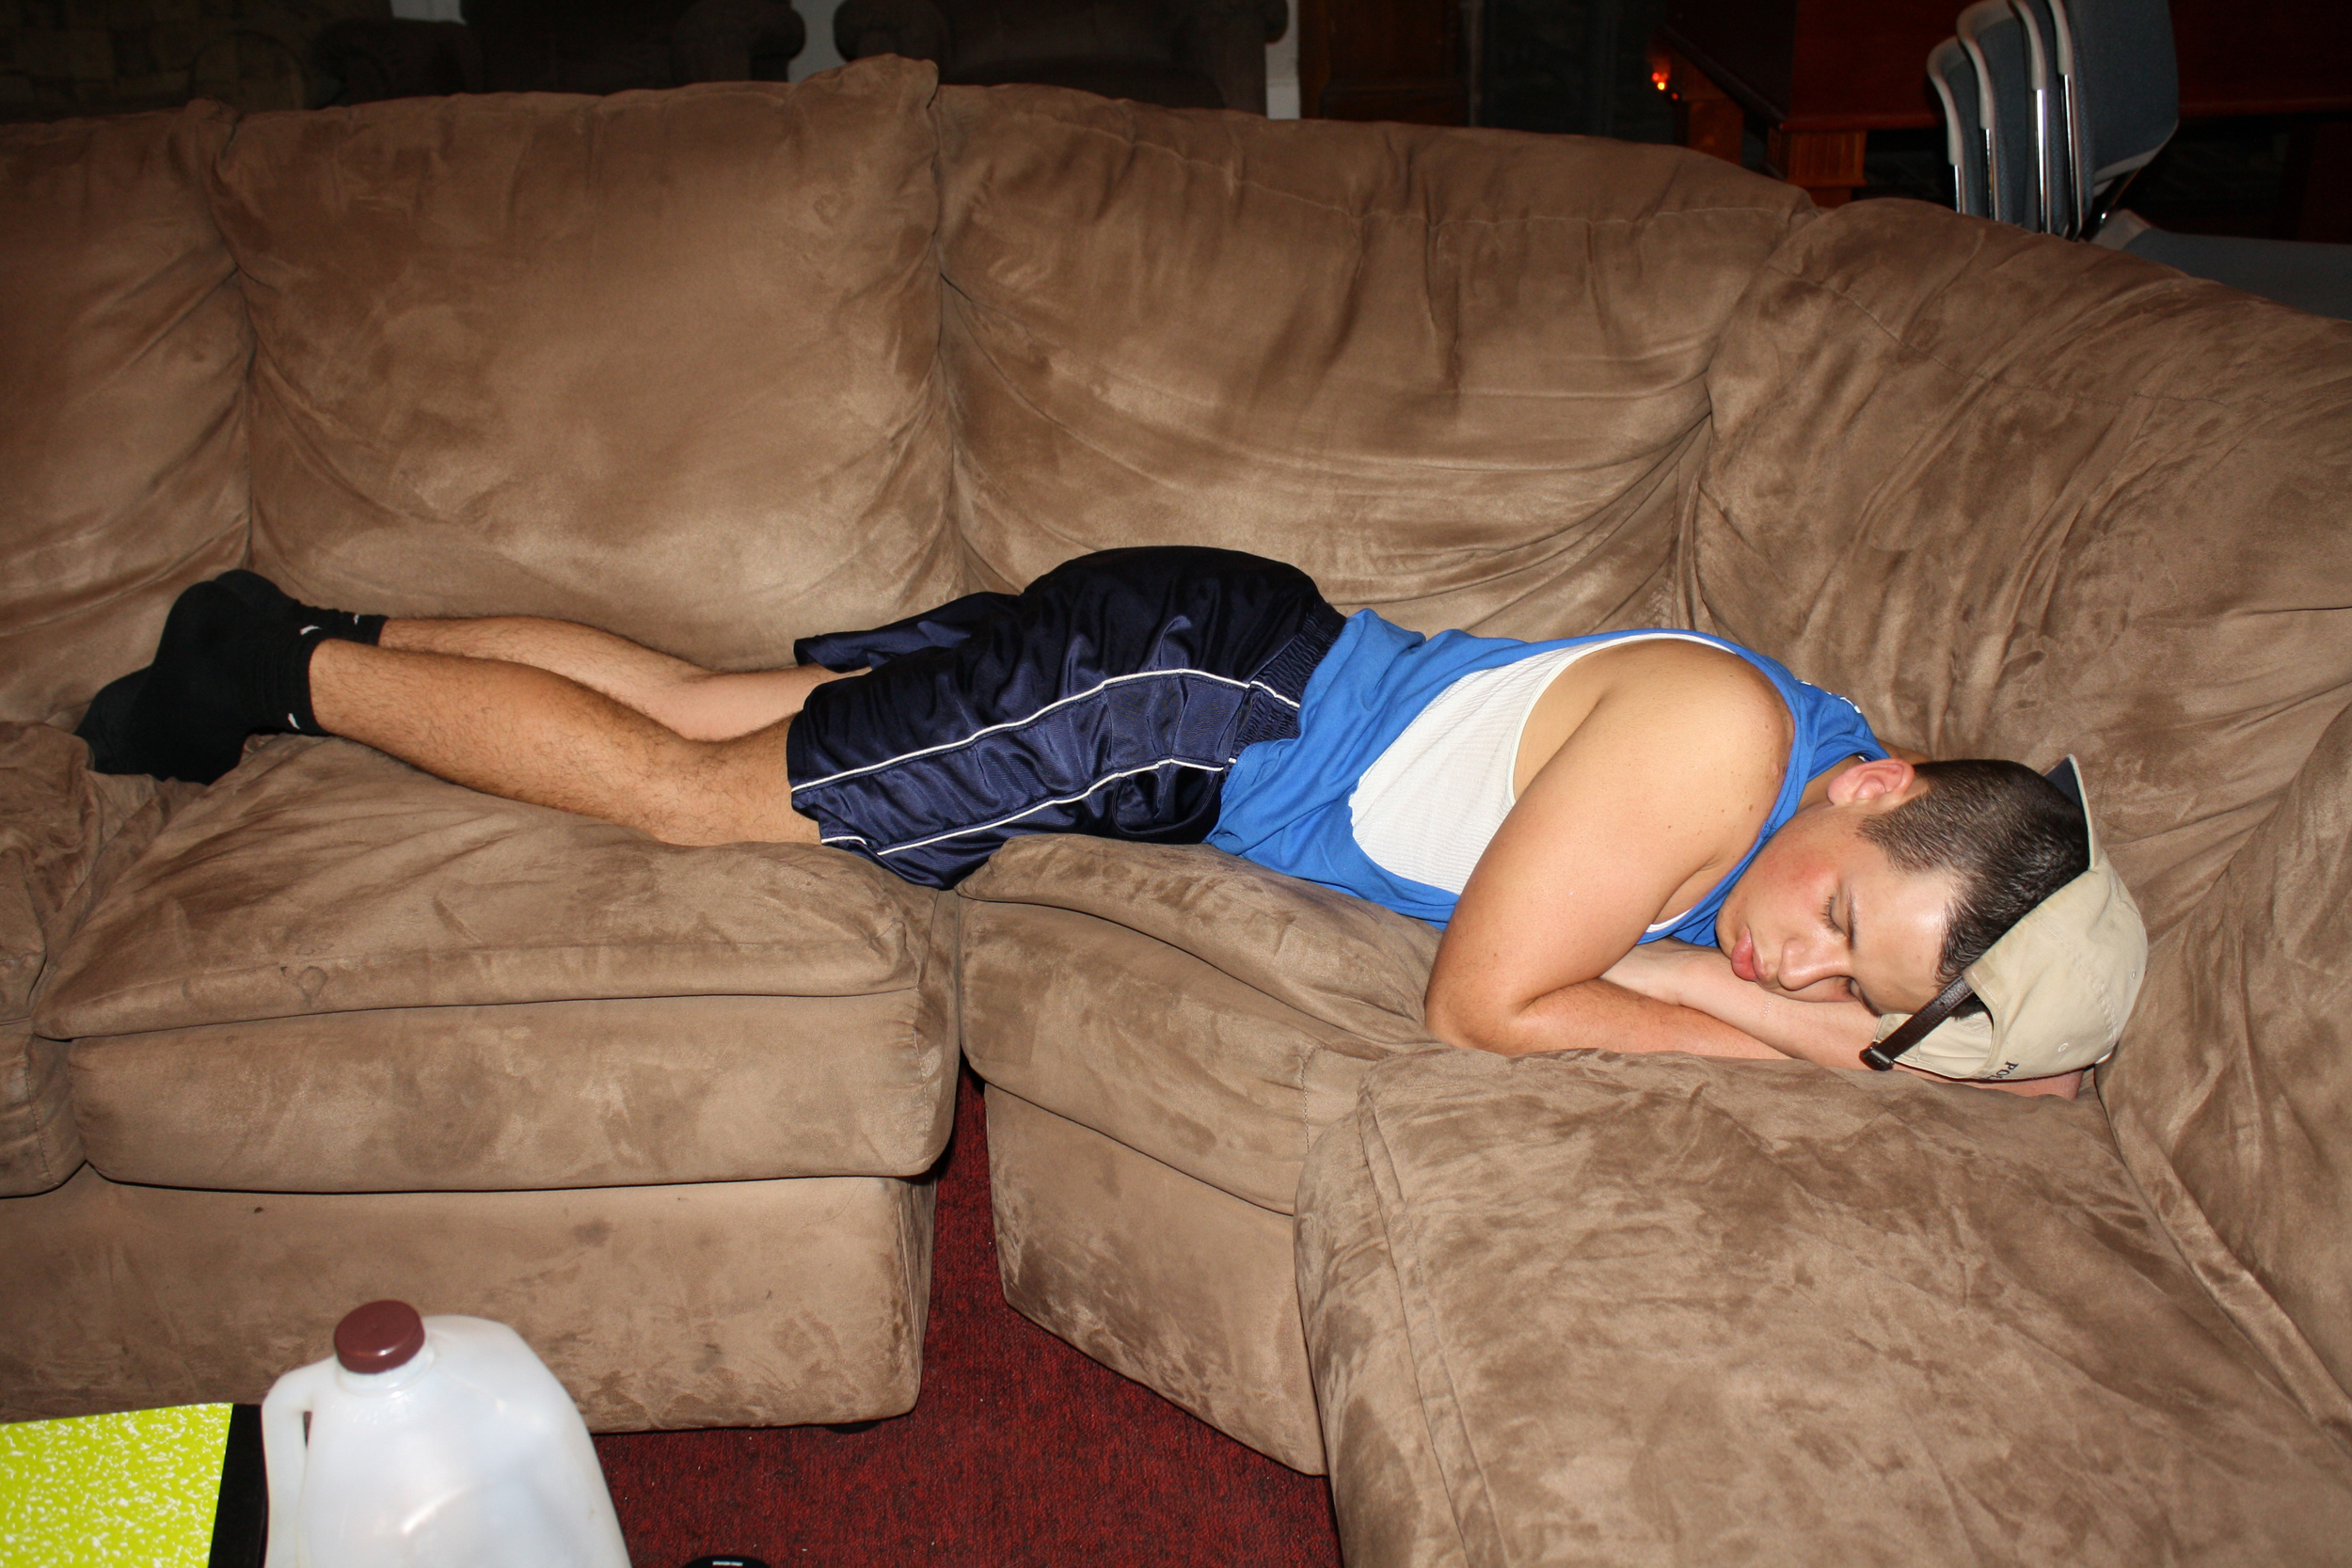  John Boston asleep on the couch
Fall 2011 